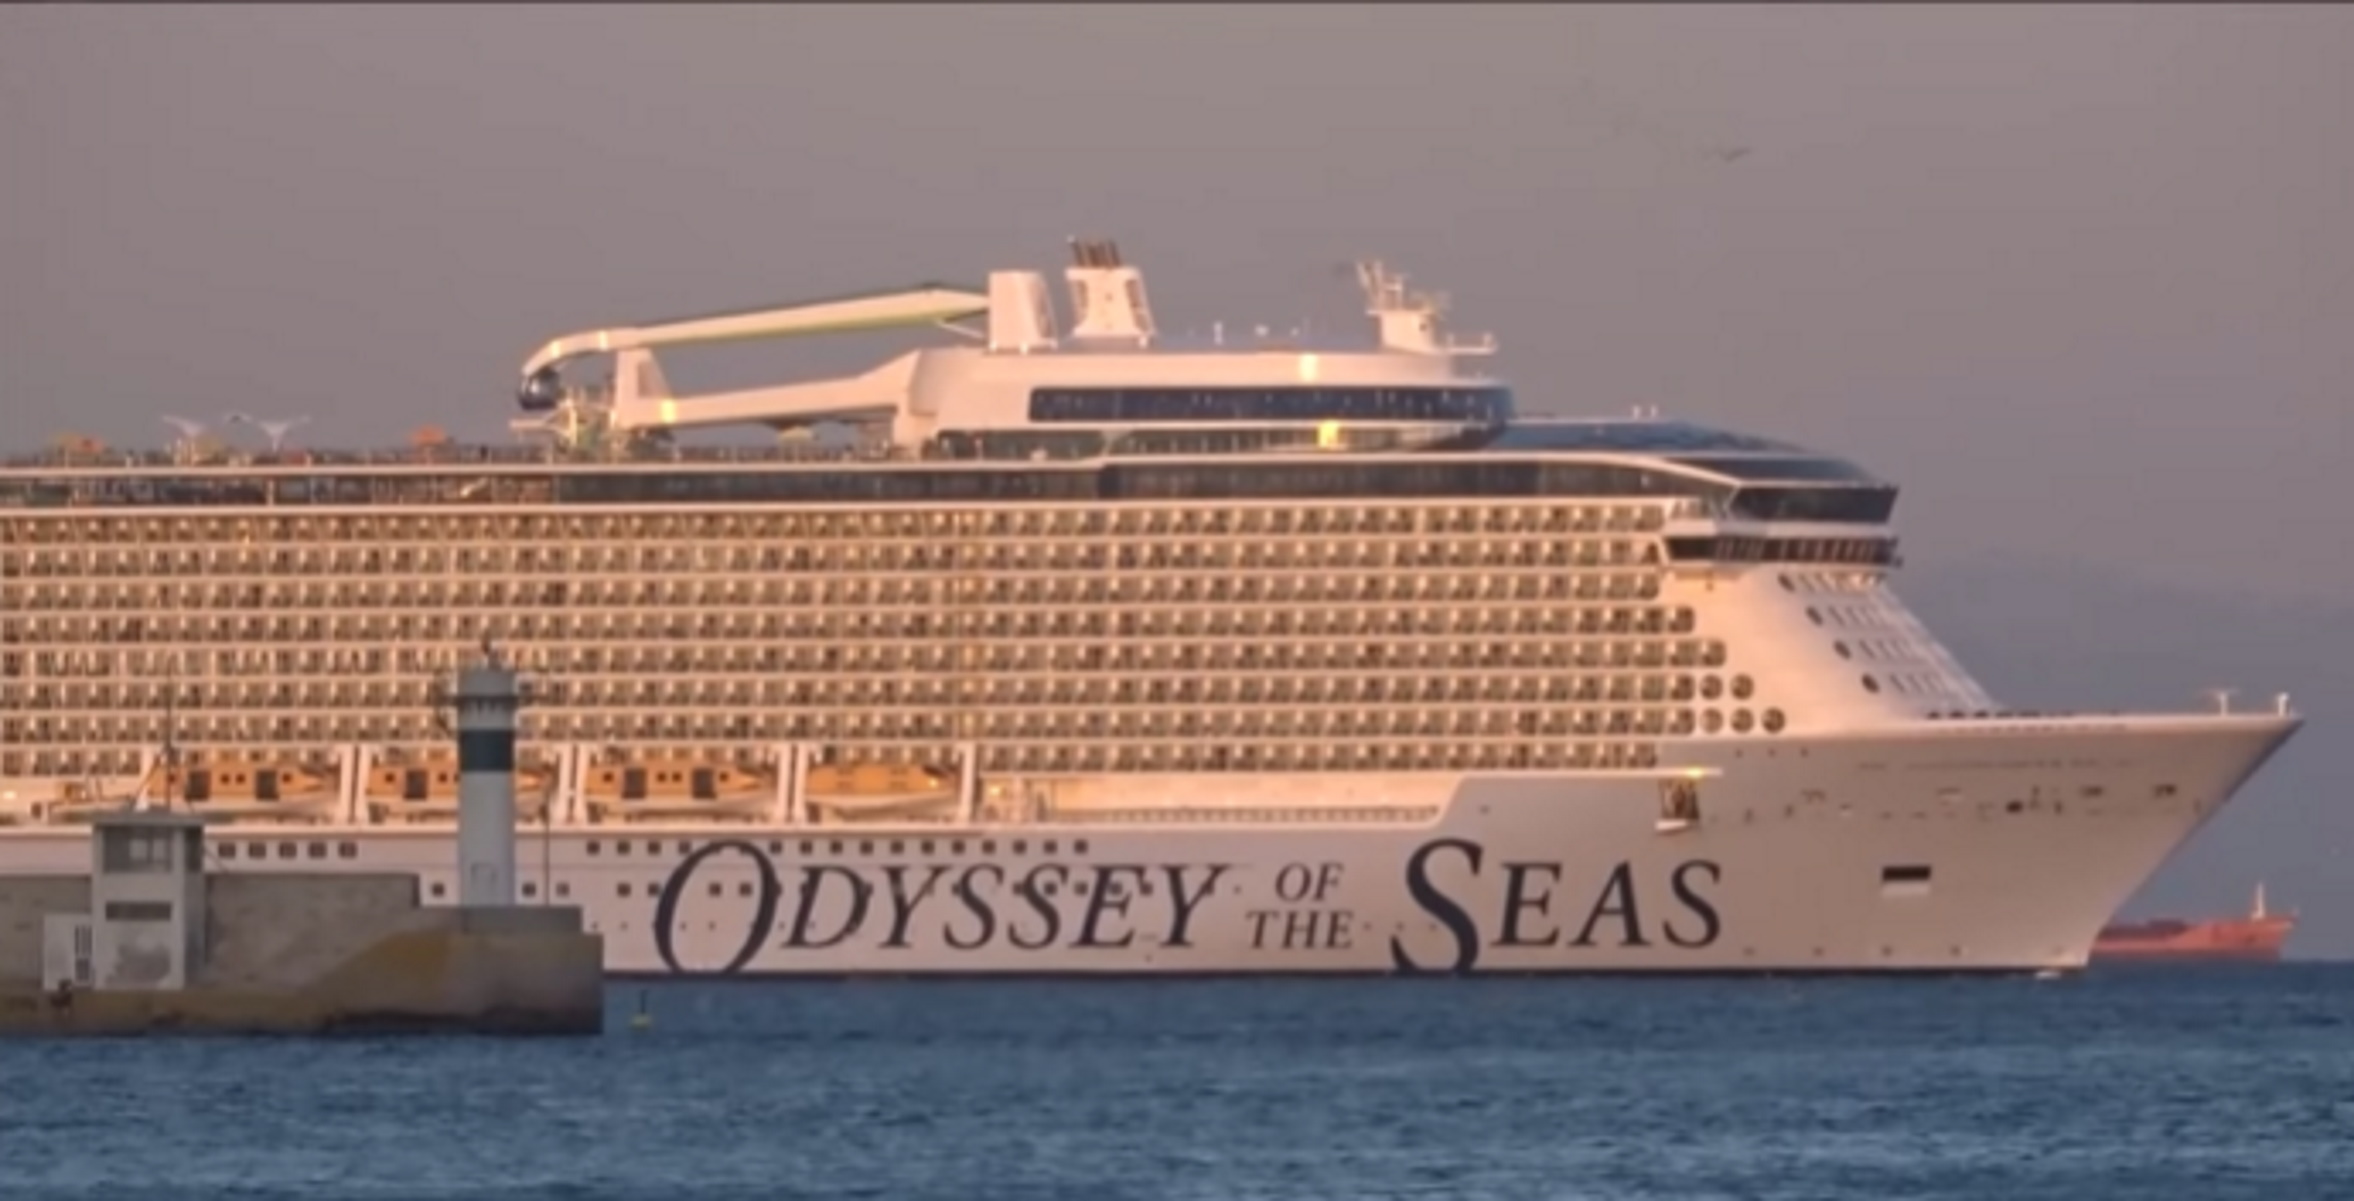 Odyssey of the Seas: Στο λιμάνι του Πειραιά ένα από τα μεγαλύτερα κρουαζιερόπλοια του κόσμου